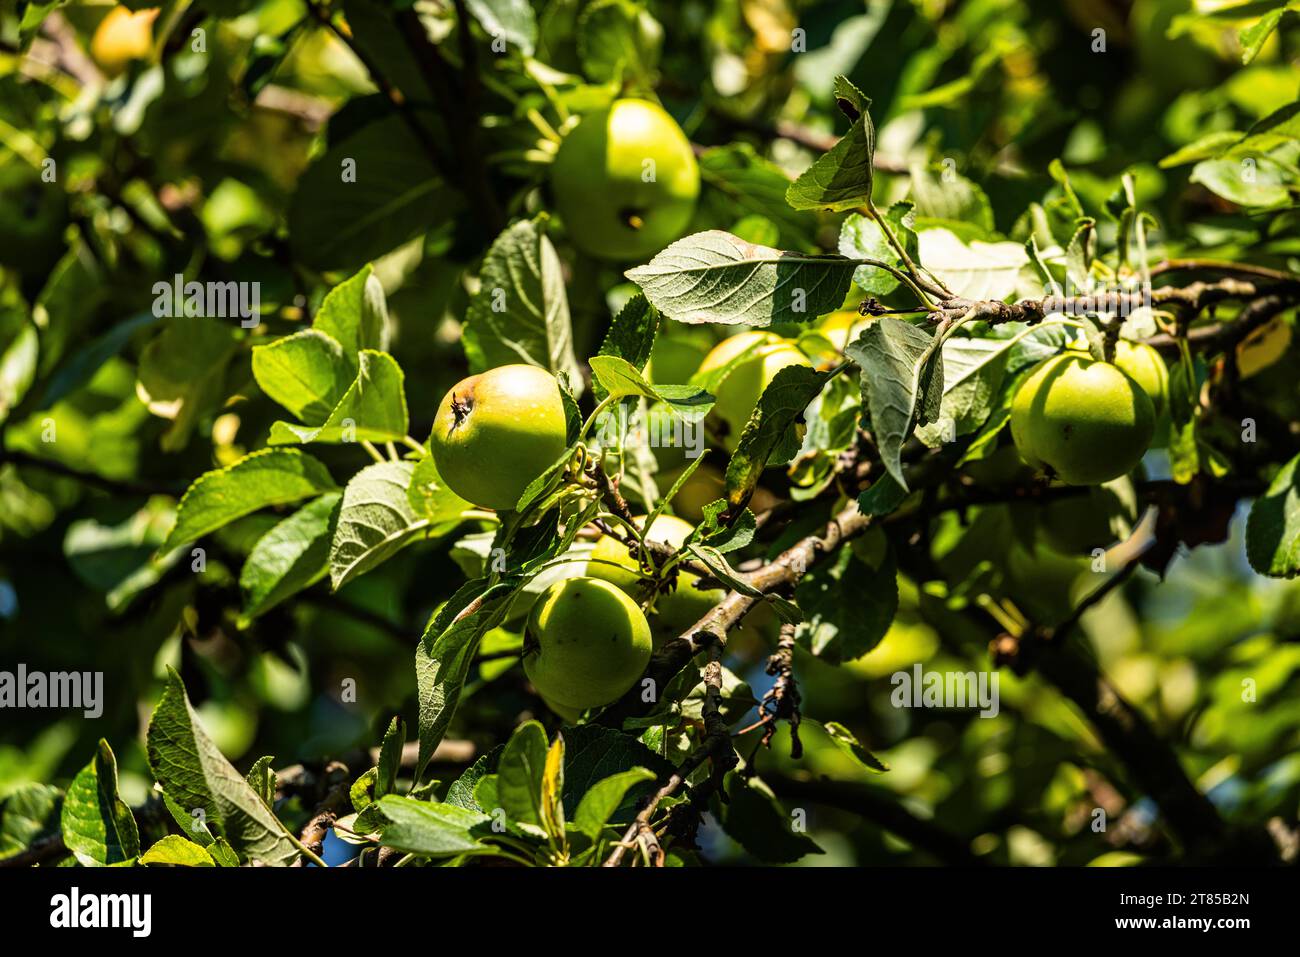 Obstbaum An einem Obstbaum wachsen grüne Äpfel. Moutier, Schweiz, 22.07.2023 *** Fruit tree Green apples grow on a fruit tree Moutier, Switzerland, 22 07 2023 Credit: Imago/Alamy Live News Stock Photo